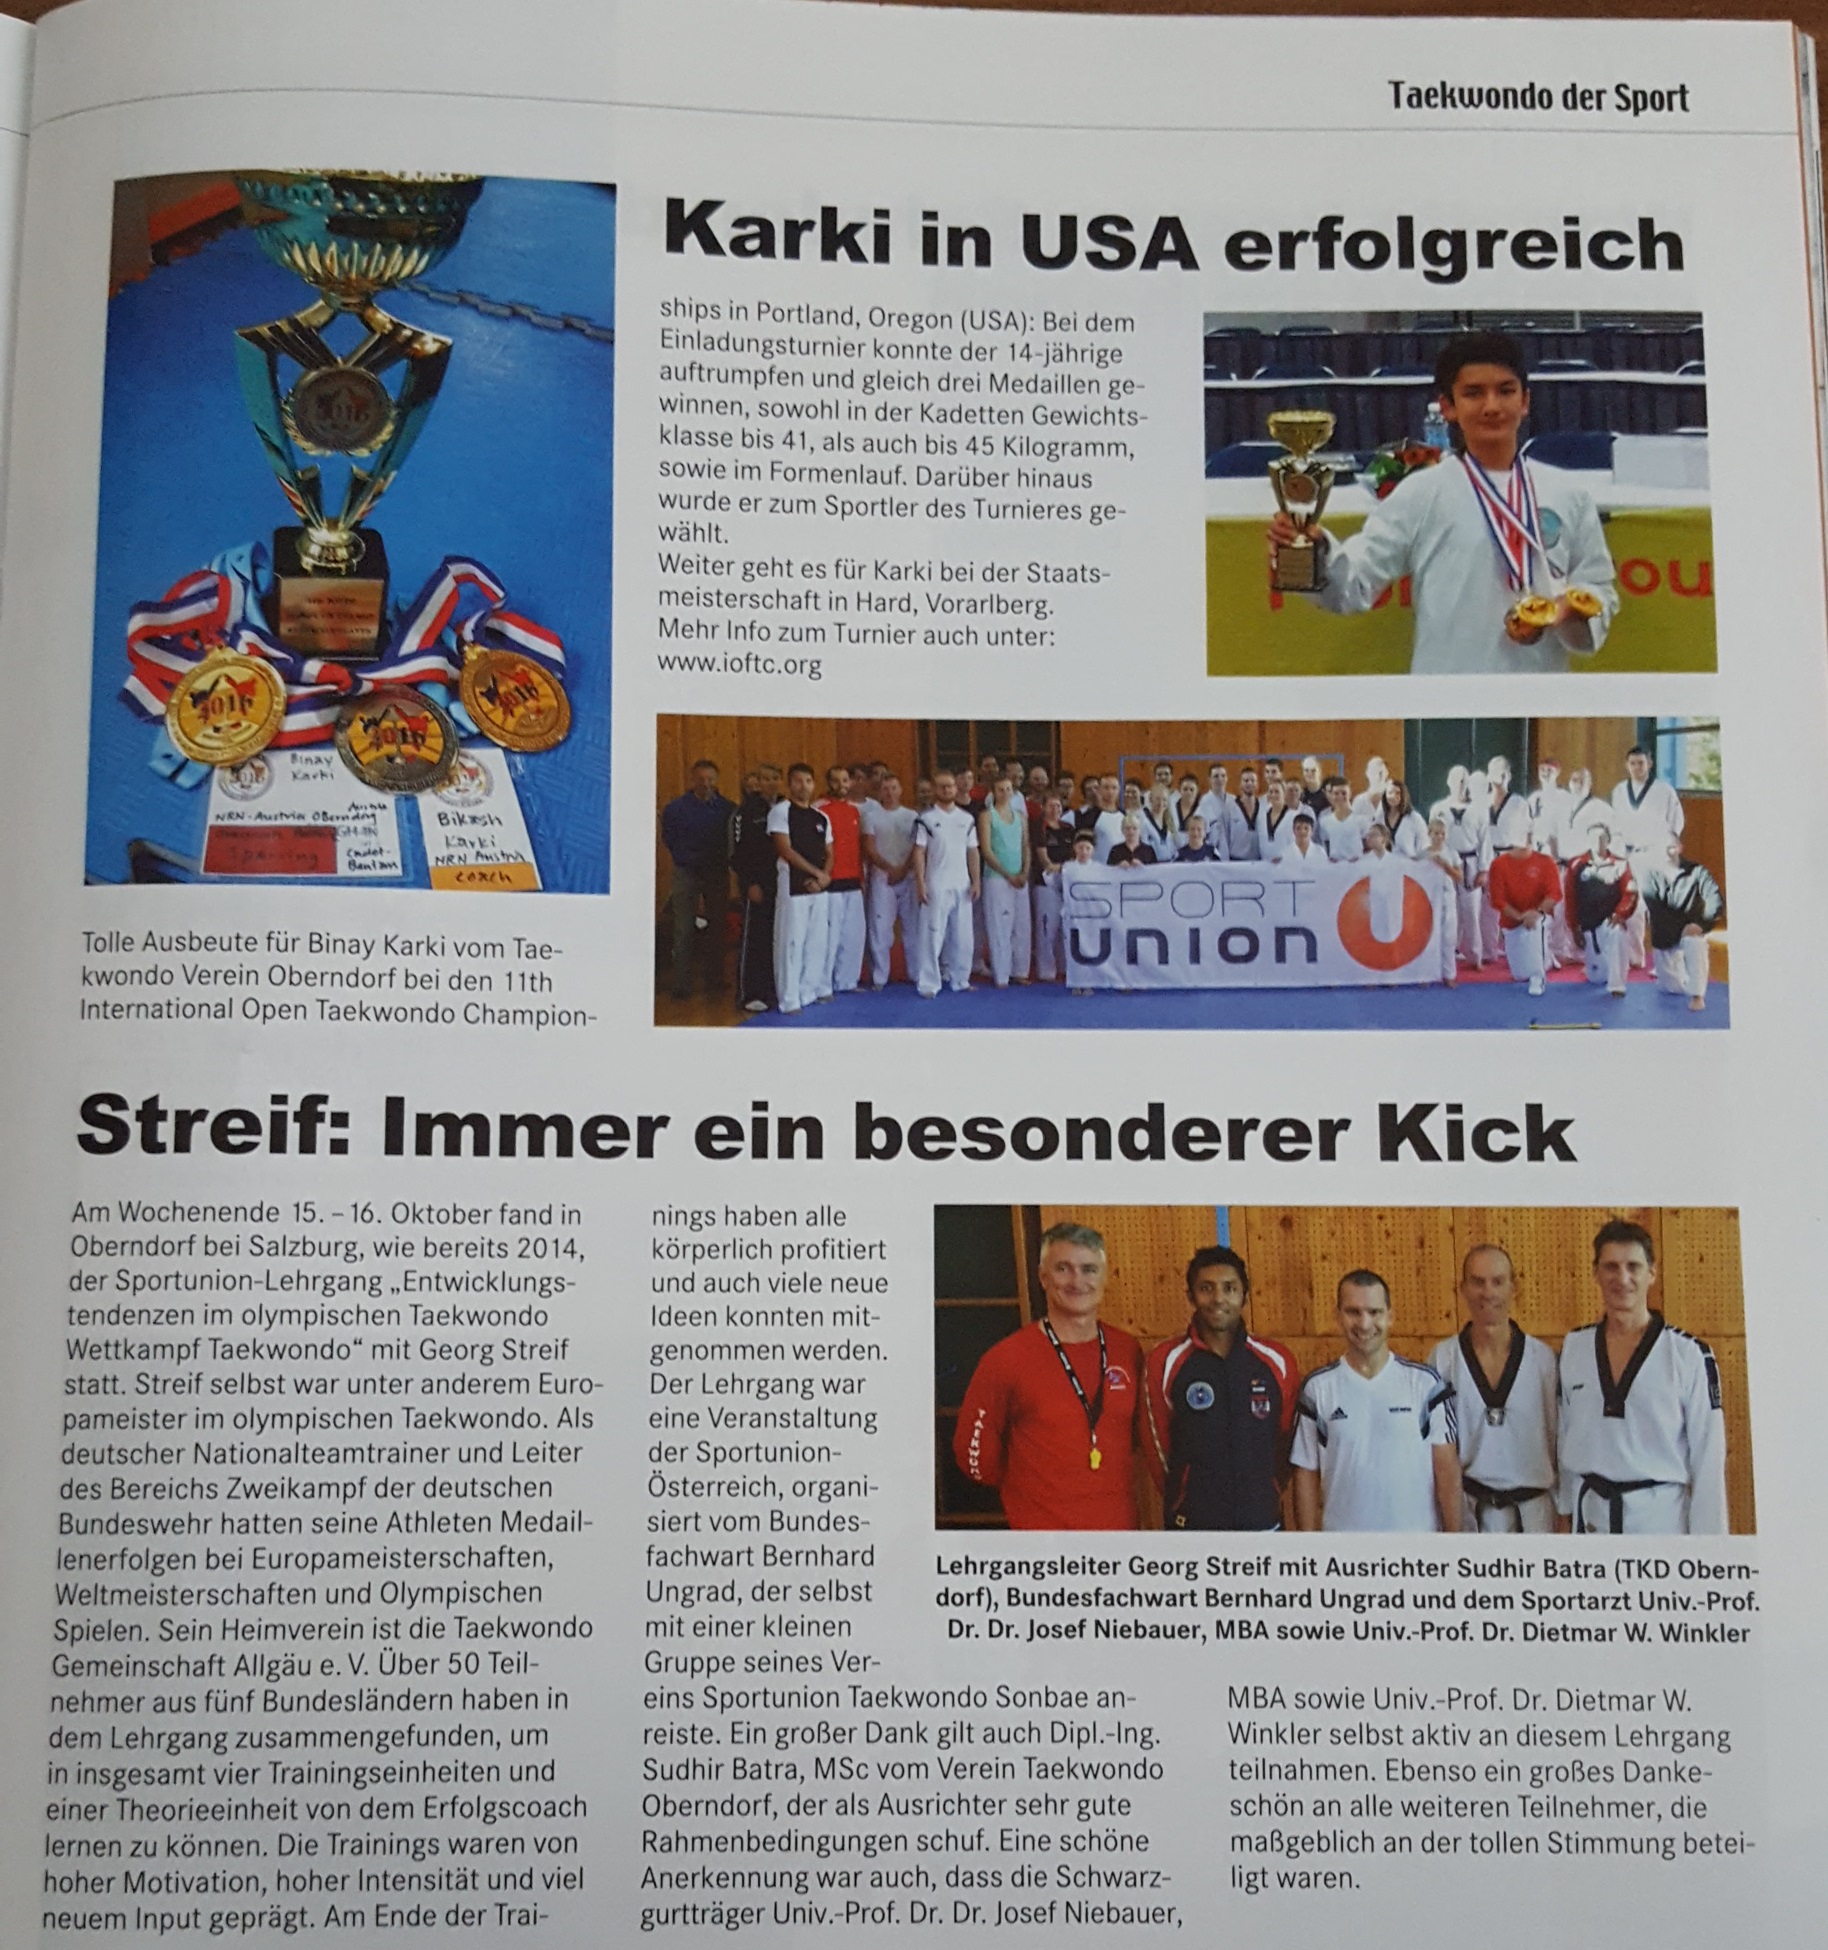 News: Univ. Prof. Dr. Dr. Josef Niebauer, MBA: Erfolgreiche Teilnahme am Taekwondo Lehrgang in Oberndorf